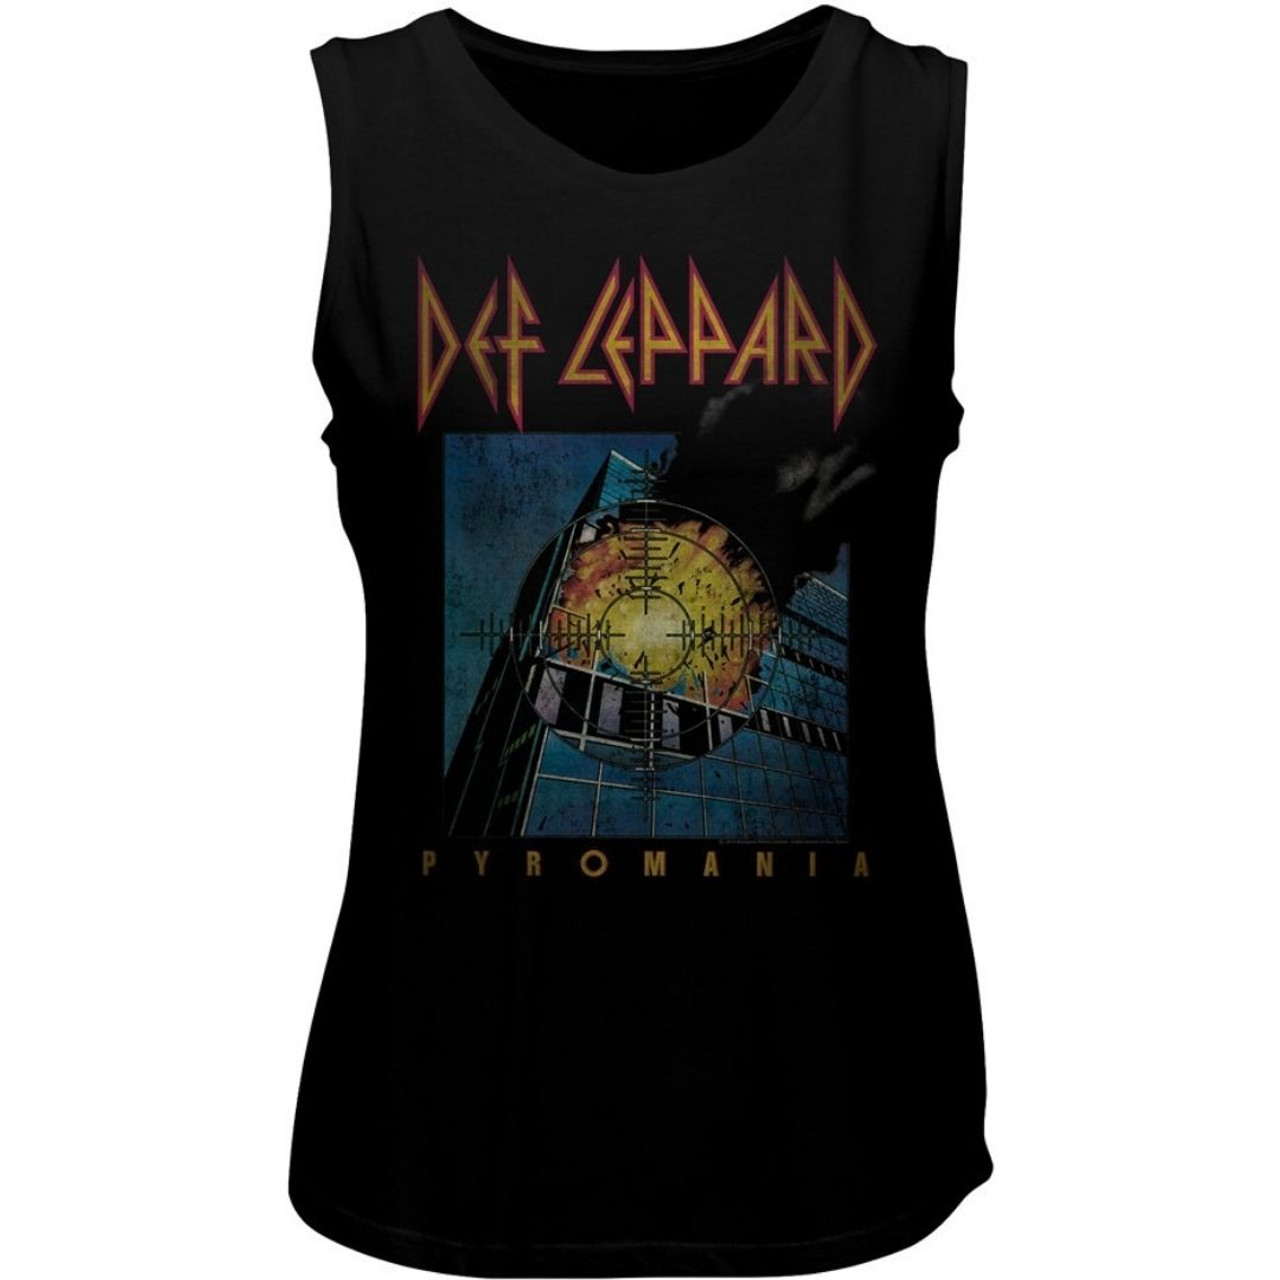 Def Leppard Pyromania Album Cover Women's Sleeveless Muscle Tank Top T-shirt